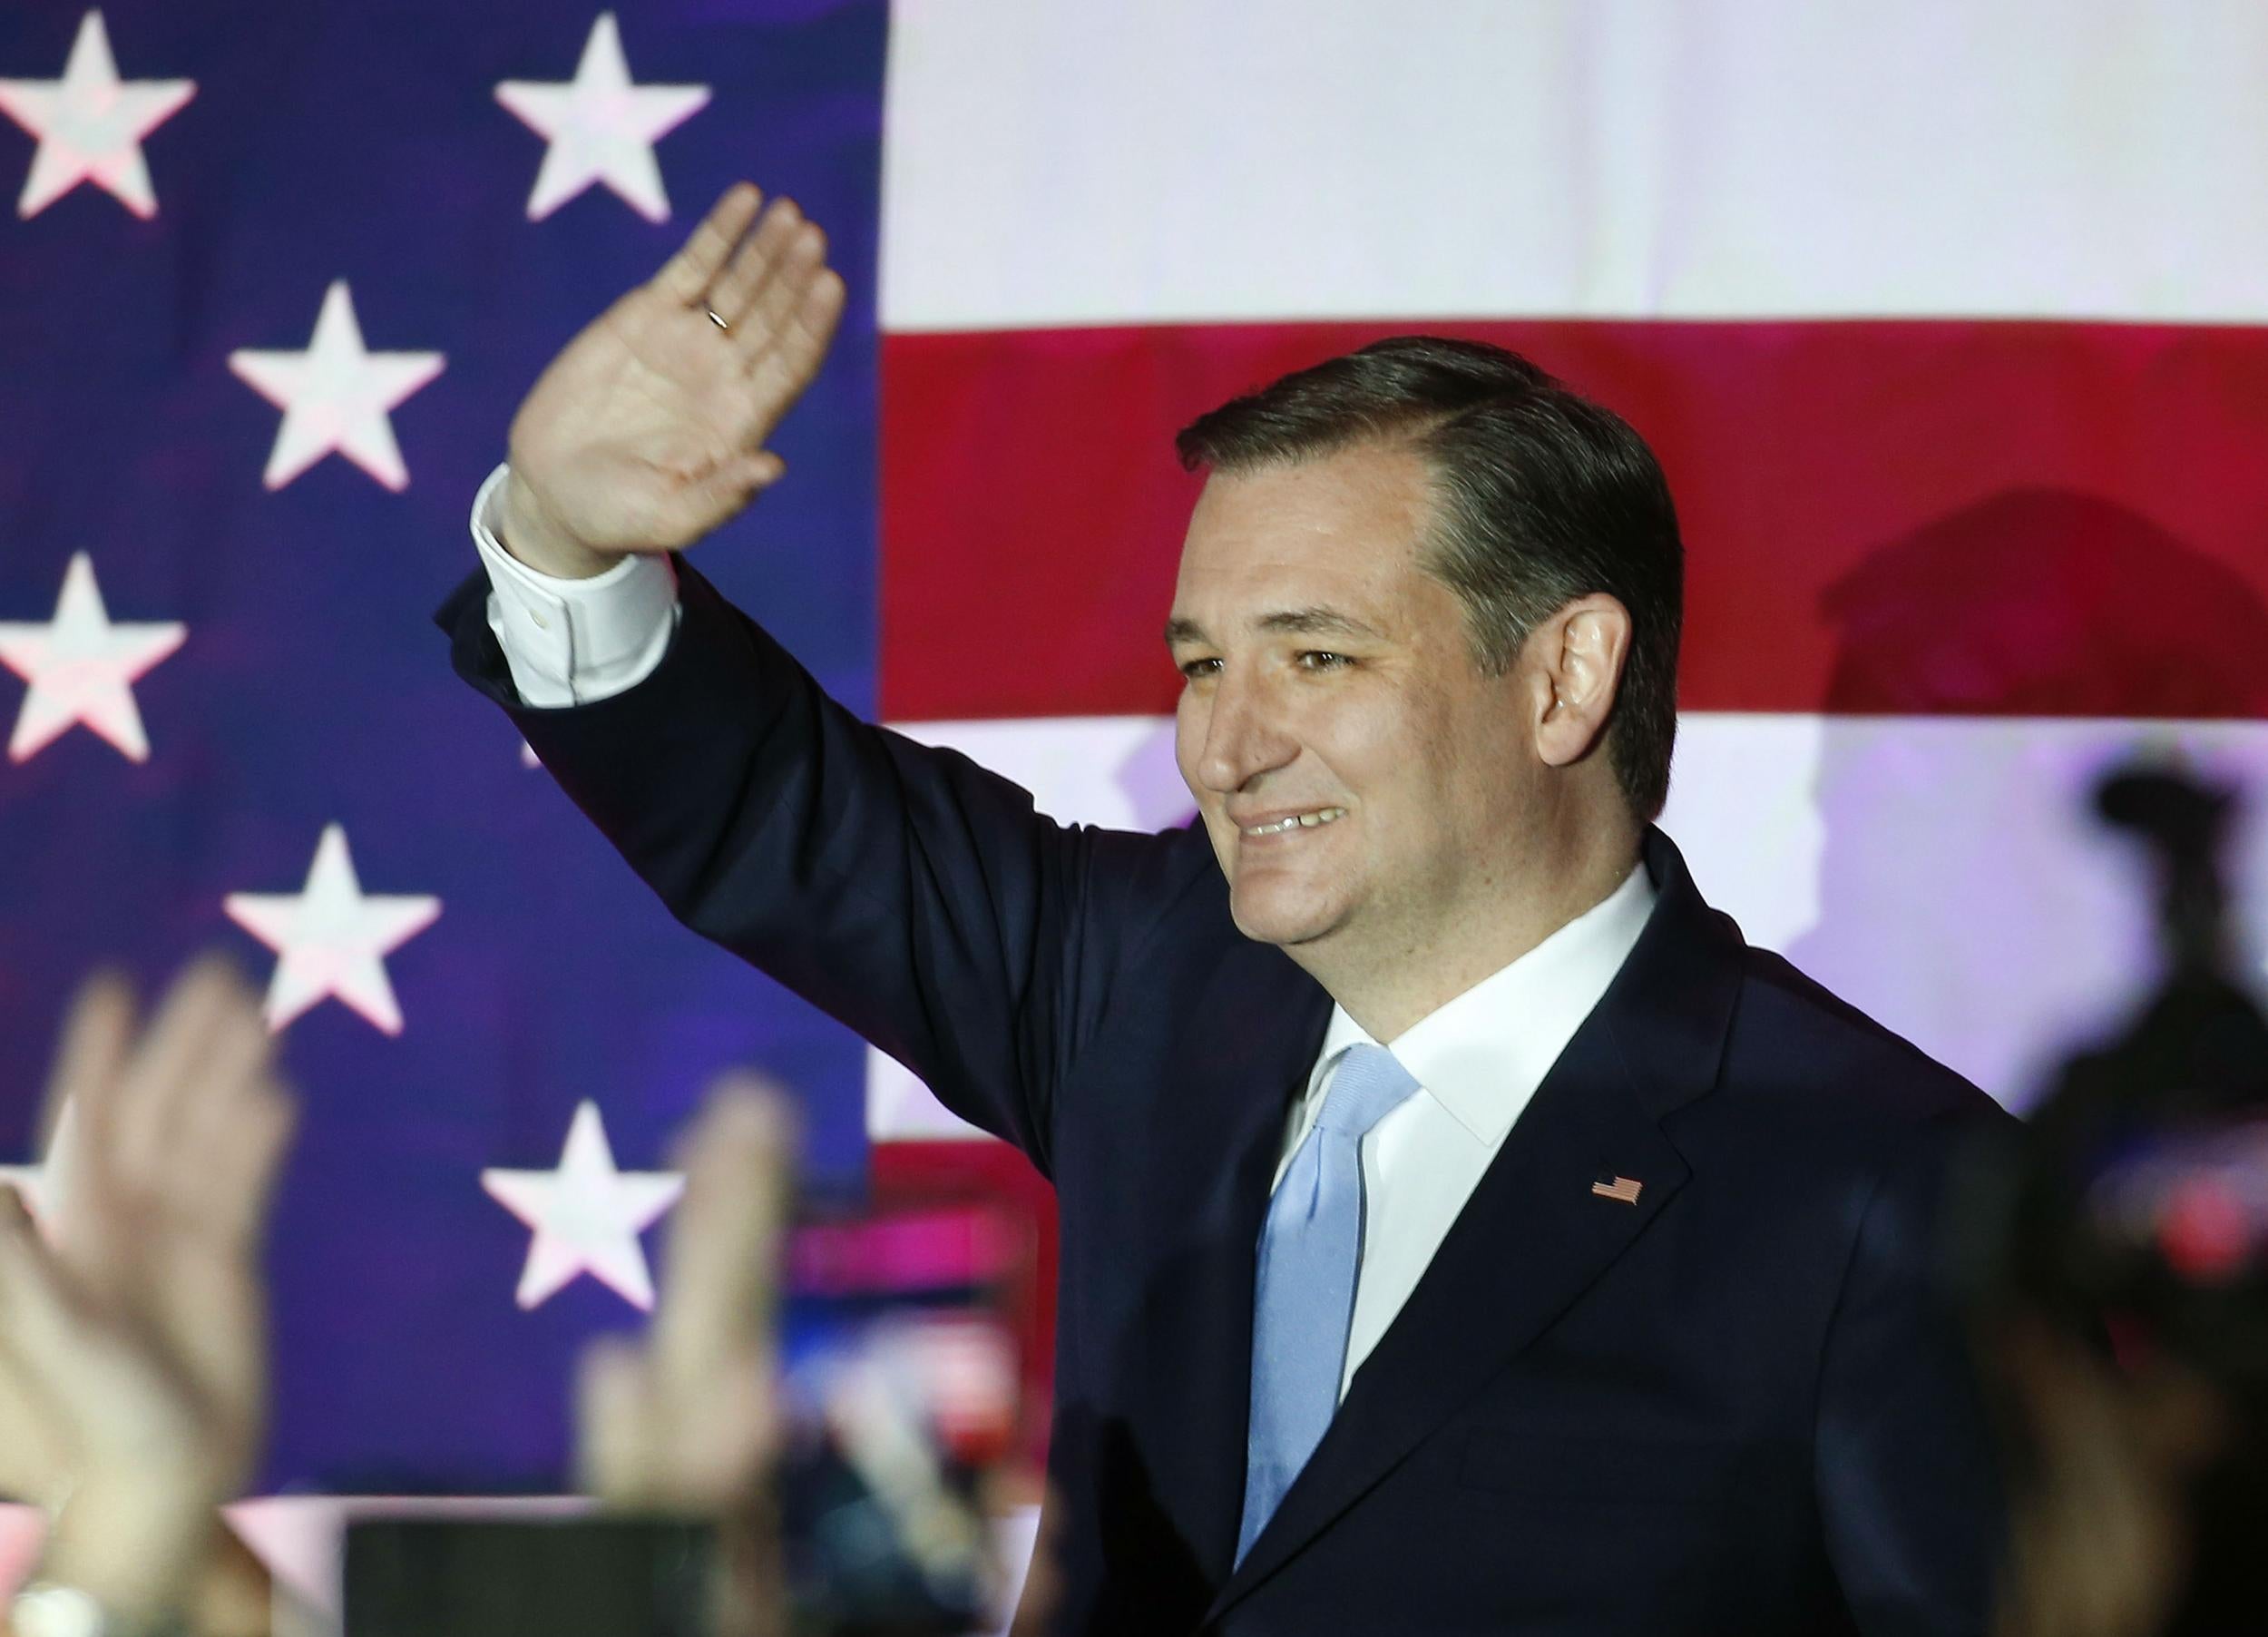 Ultra-conservative Texas Senator and Republican presidential hopeful Ted Cruz